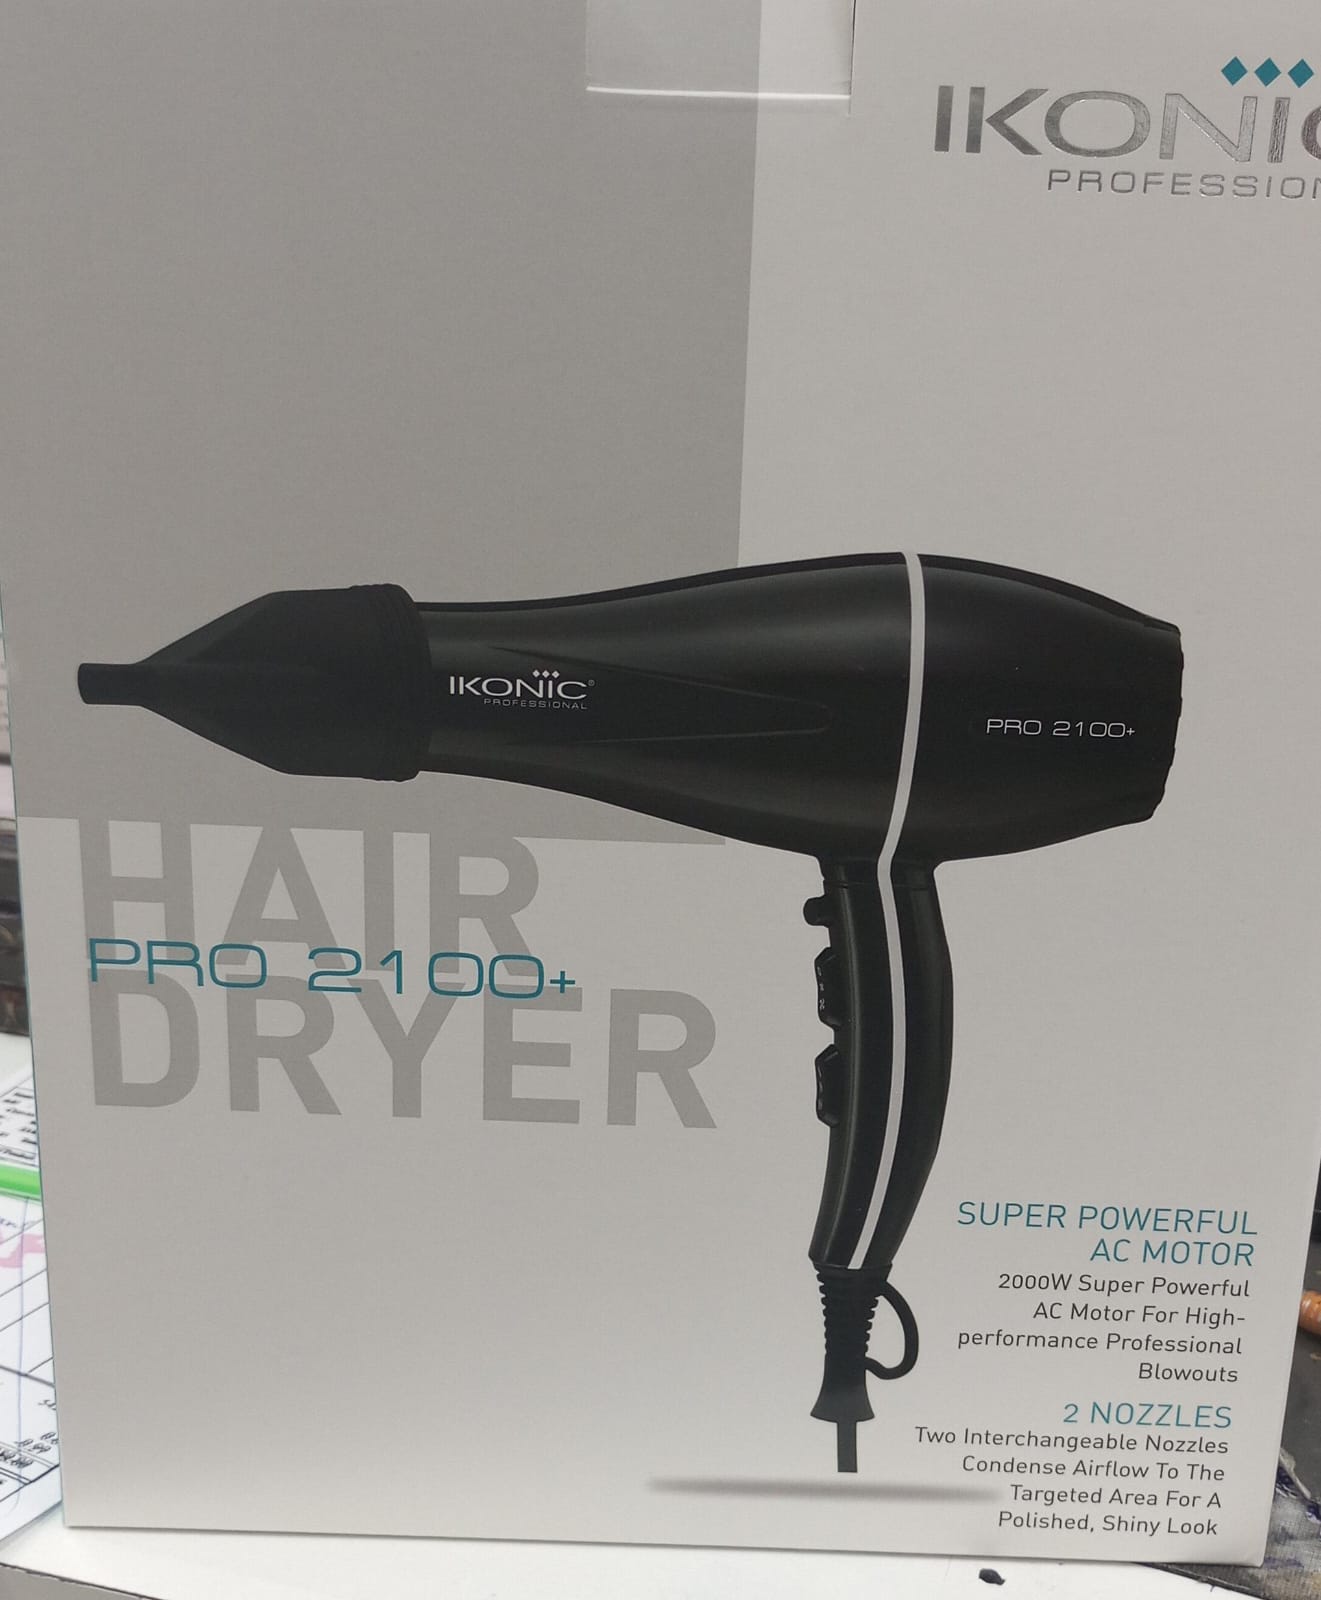 Ikonic Professional Hair Dryer Pro 2100